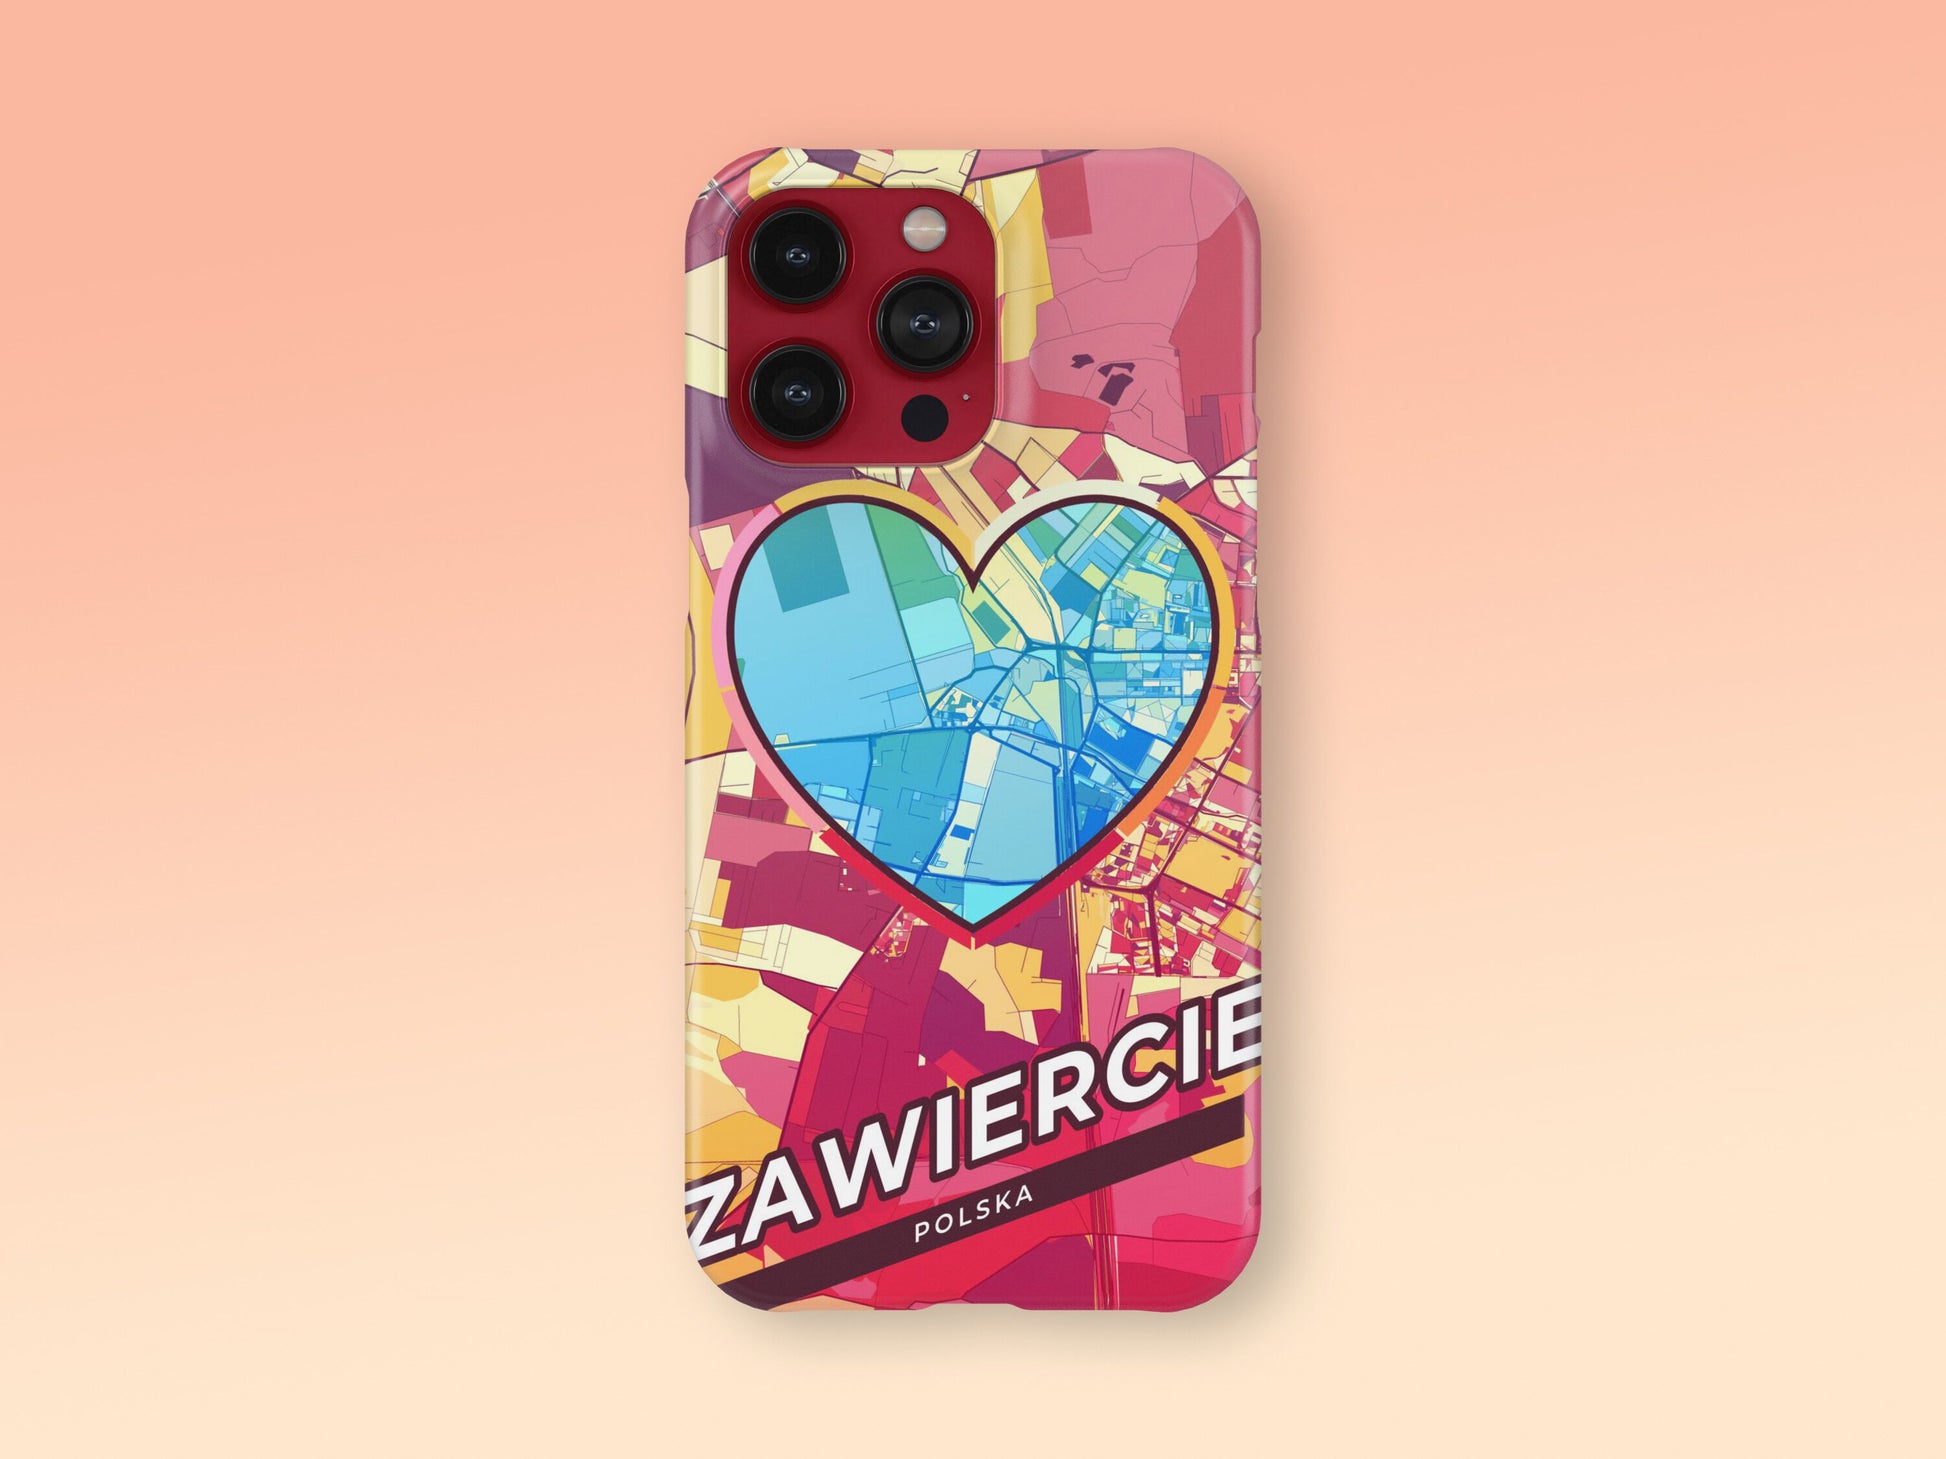 Zawiercie Poland slim phone case with colorful icon 2